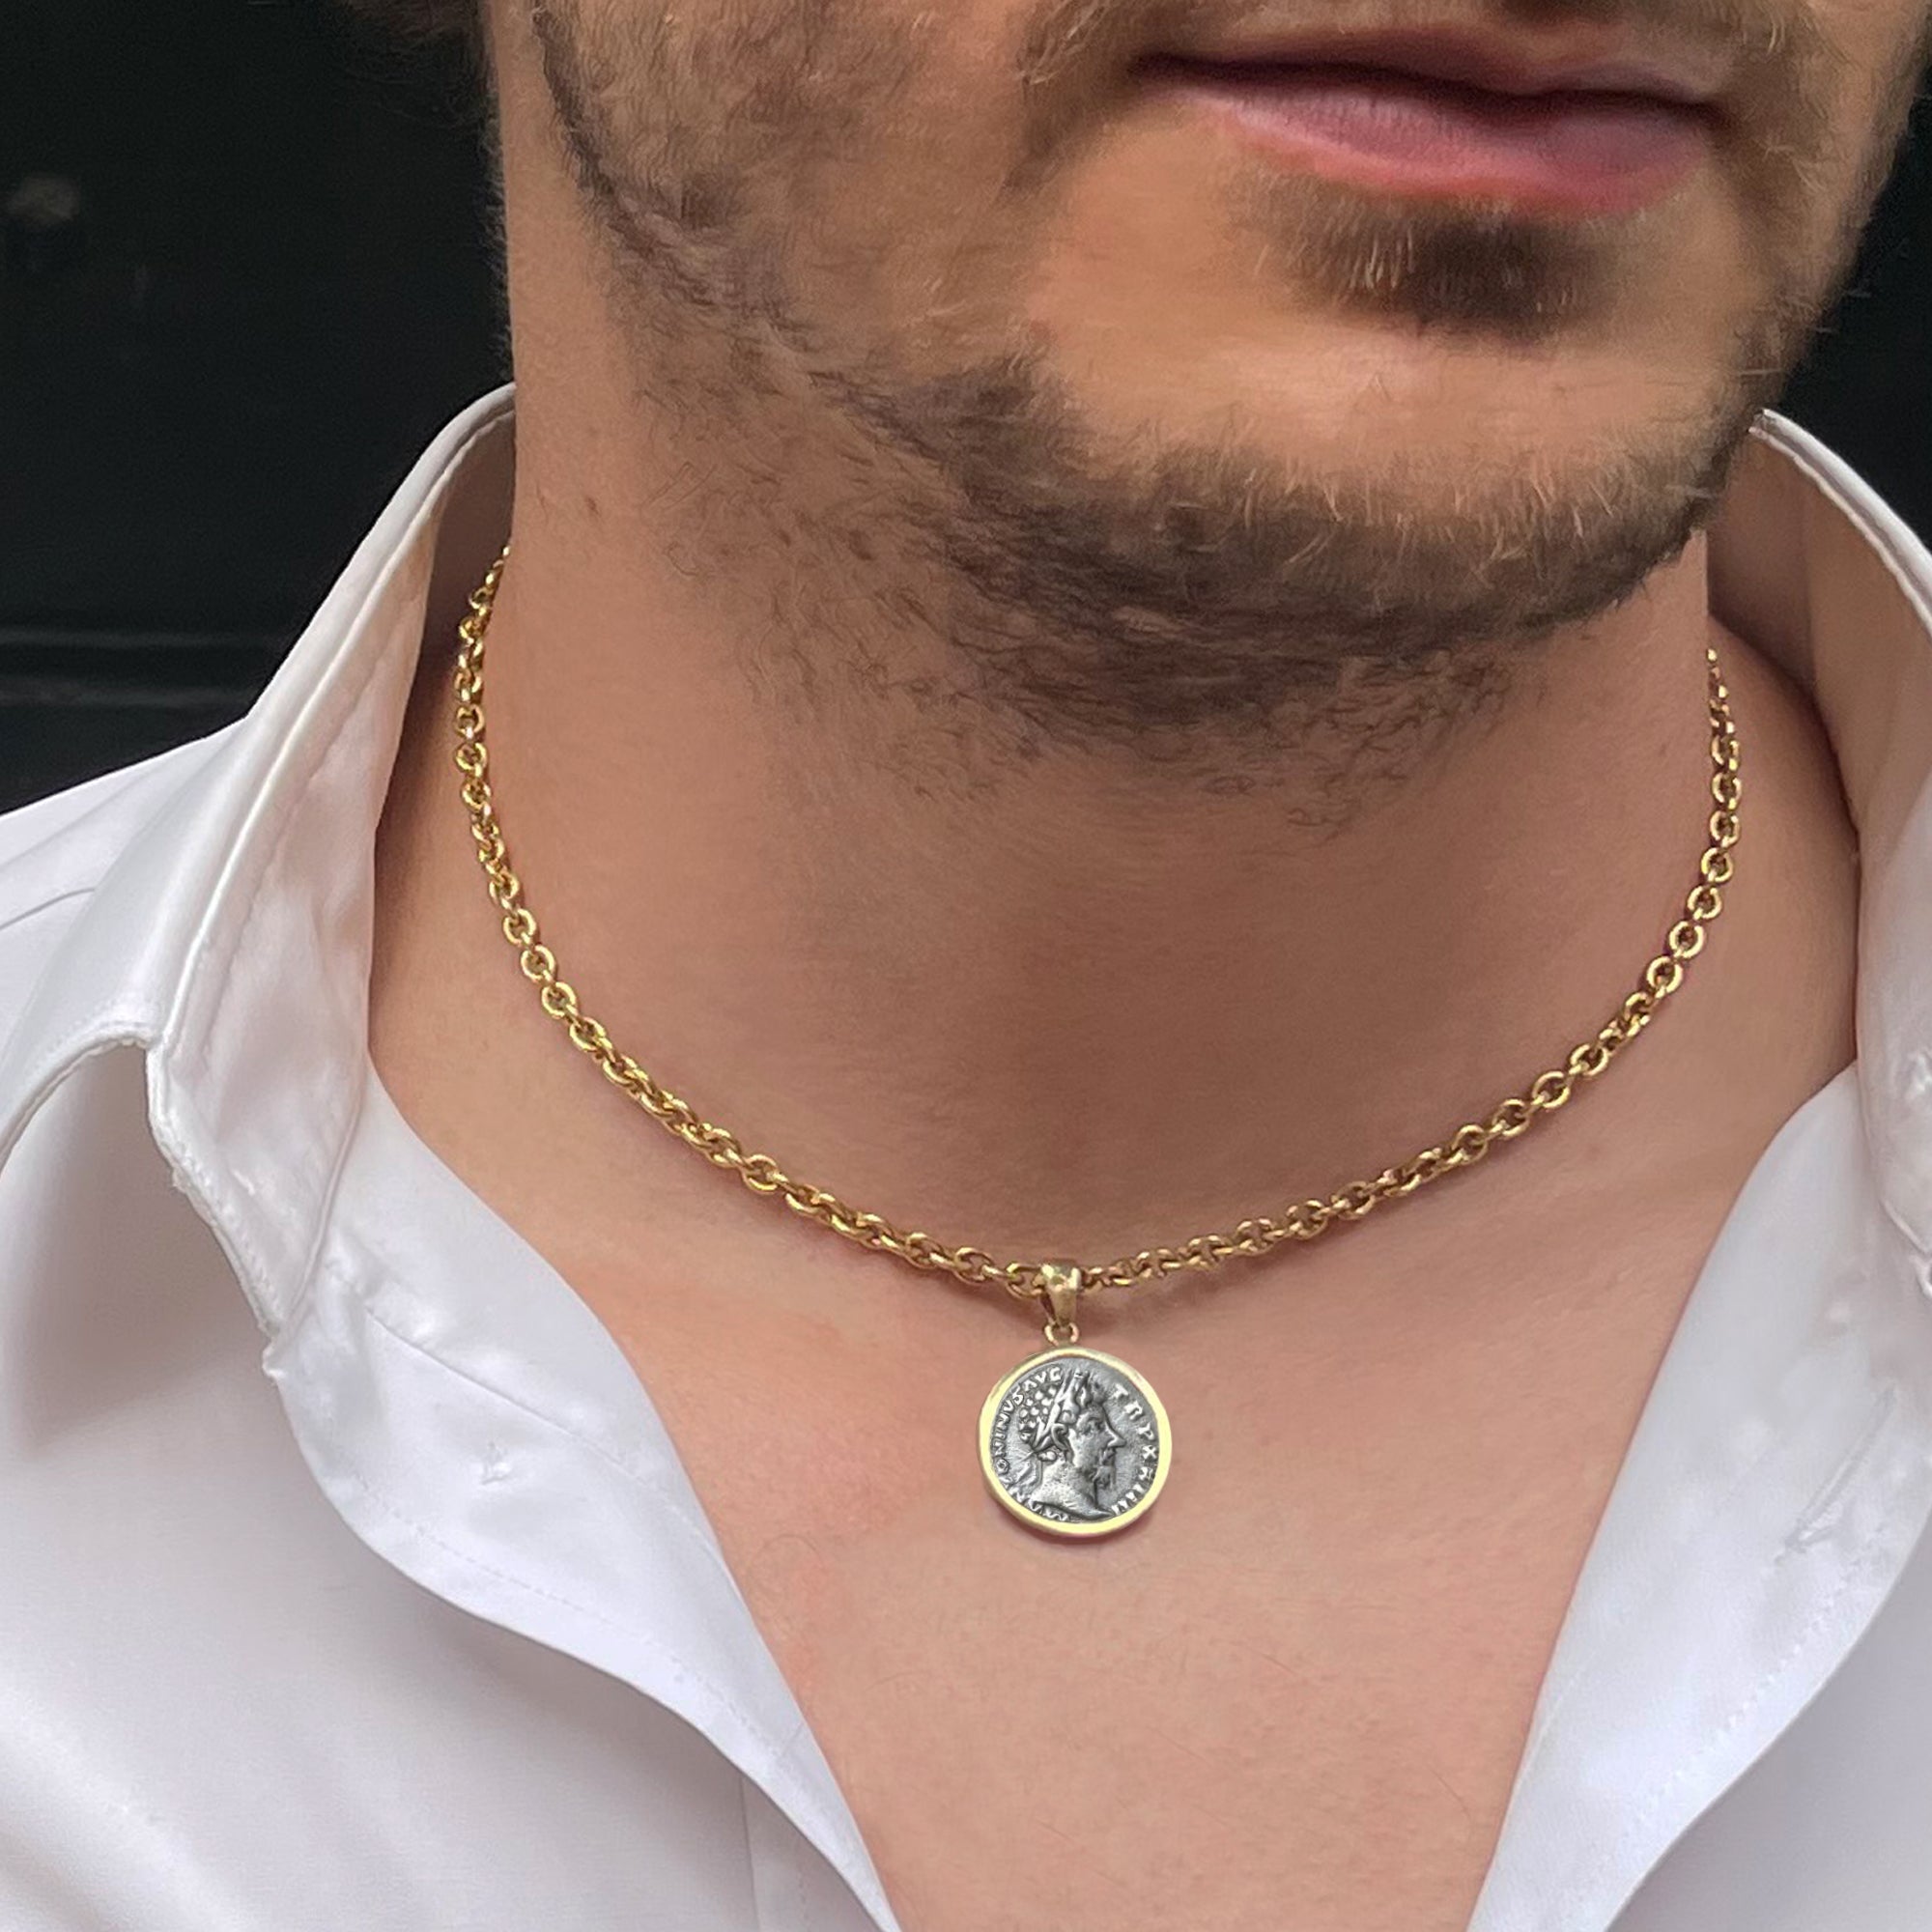 Buy Memento Mori Necklace Silver Pendant Memento Mori Jewelry Skull Necklace  for Men Women Stoic Necklace Marcus Aurelius Stoic Jewelry Online in India  - Etsy